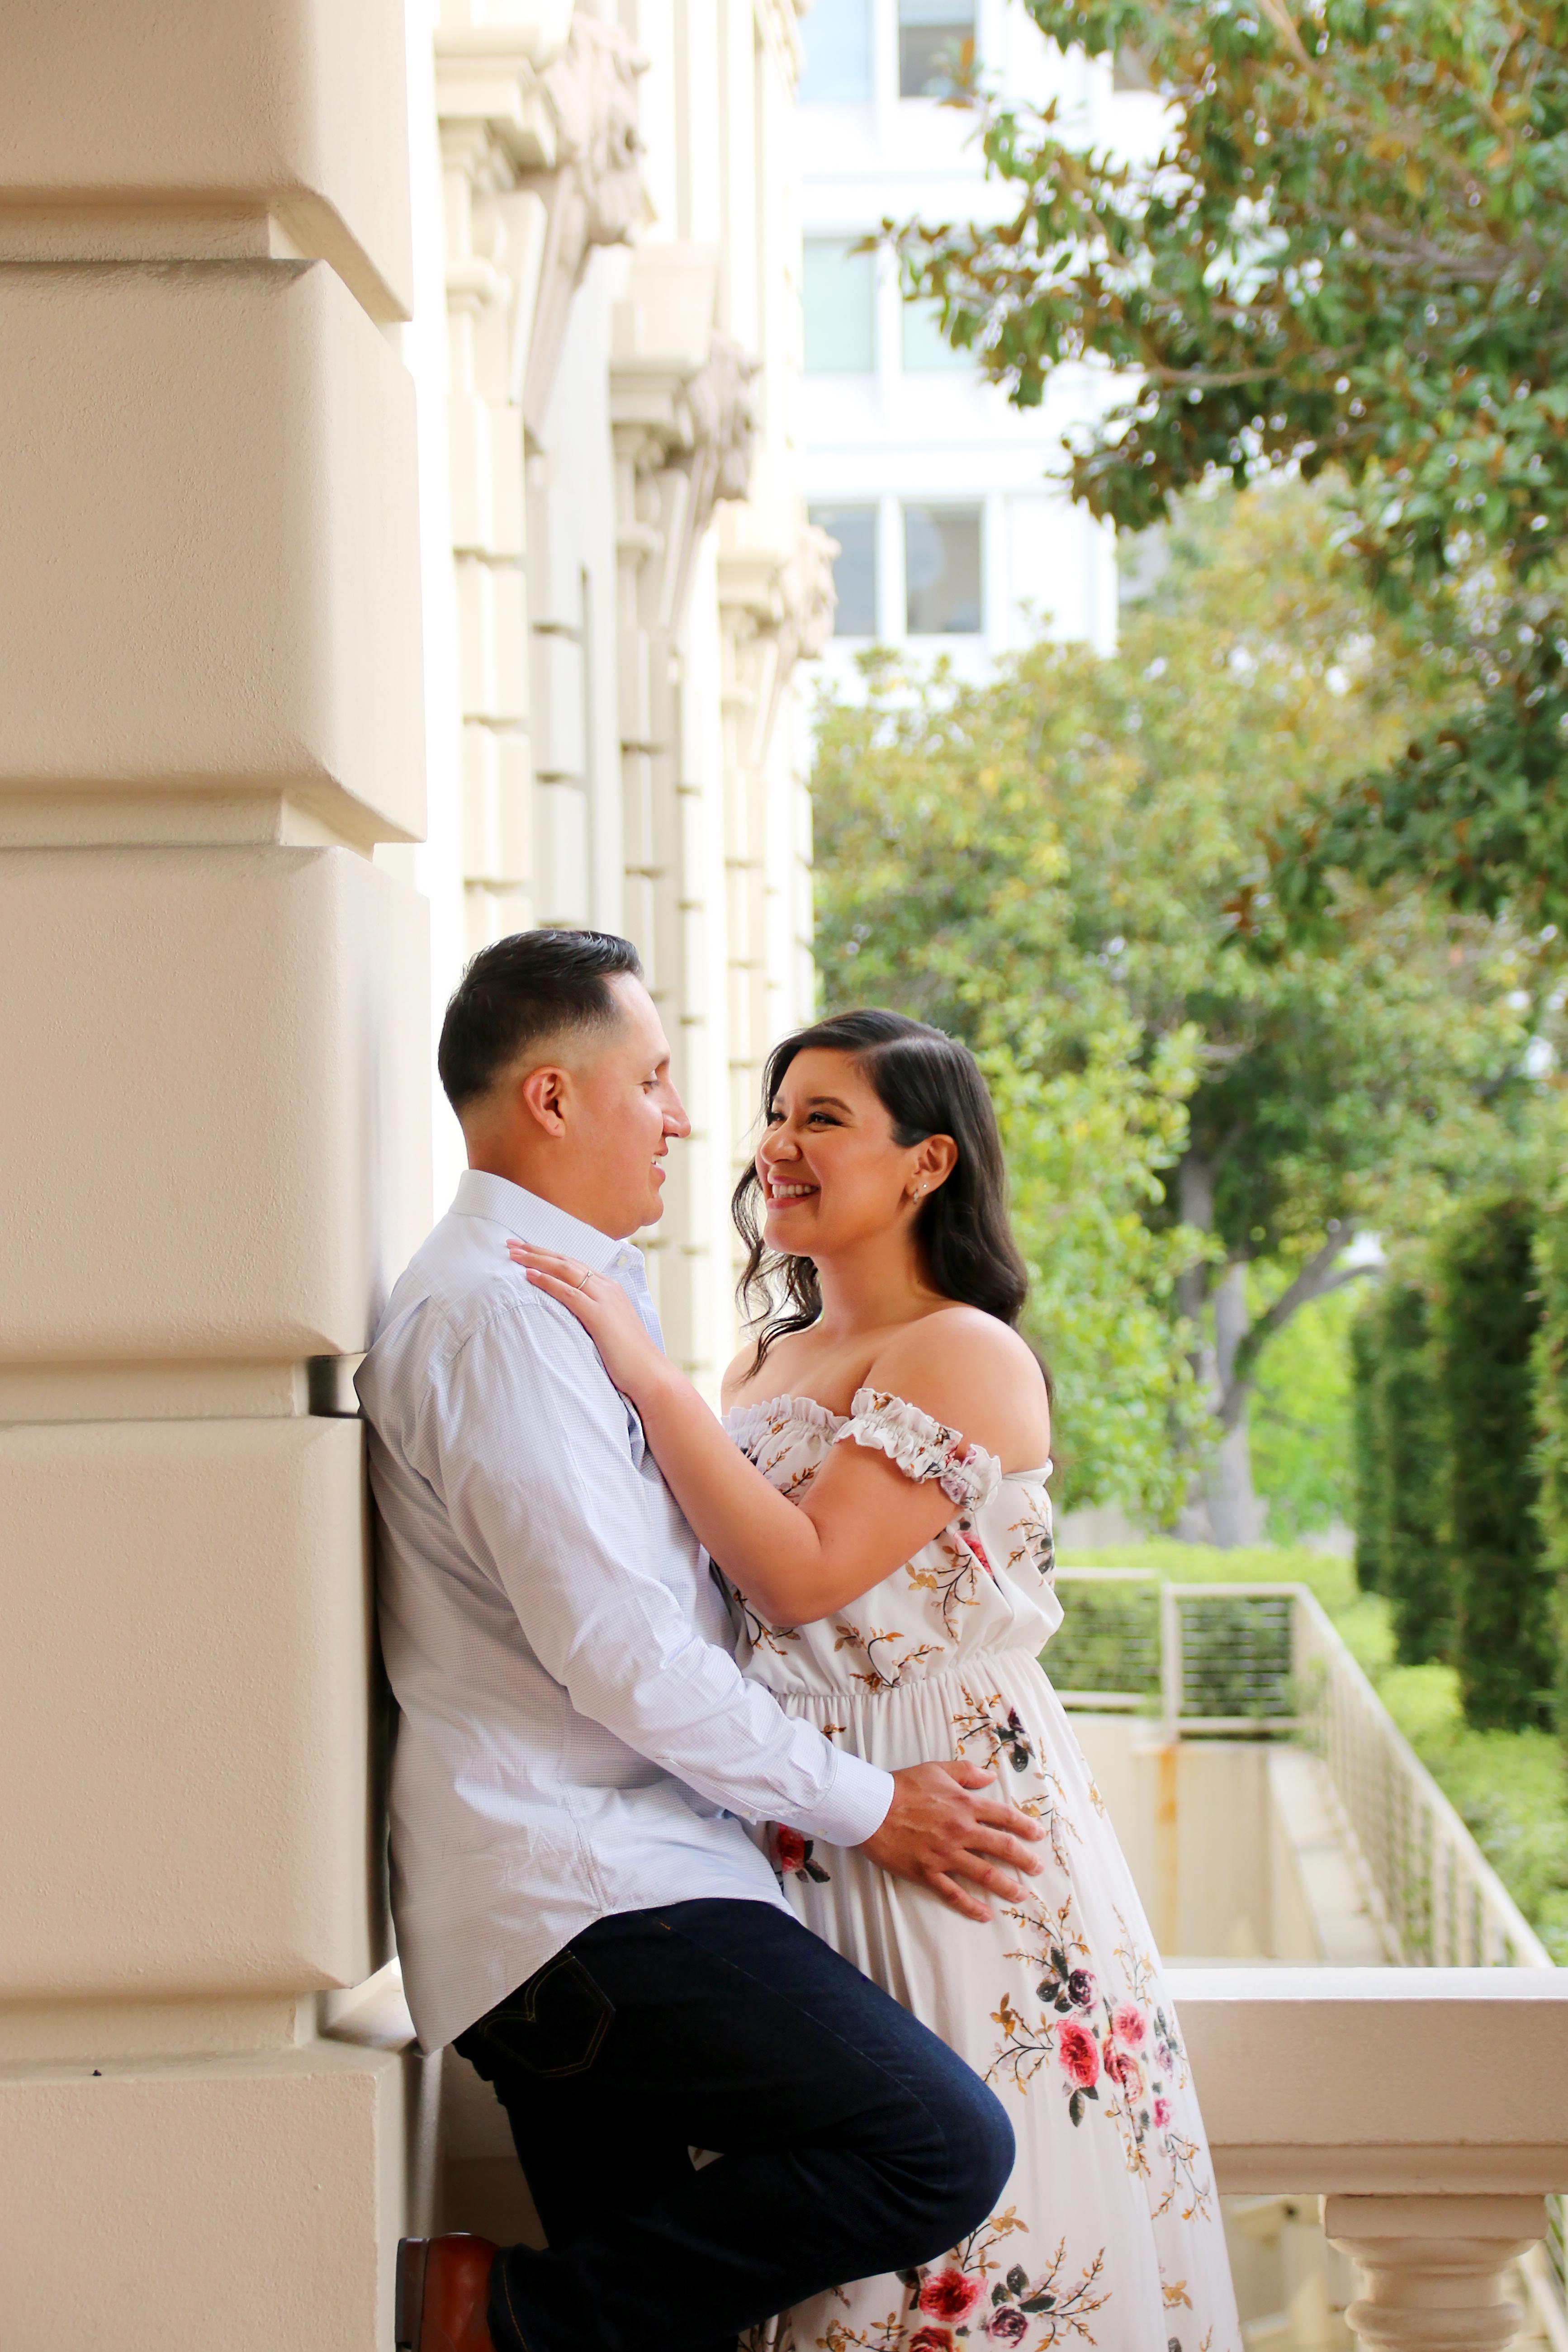 The Wedding Website of Vanessa Moreno and Oscar Muñoz